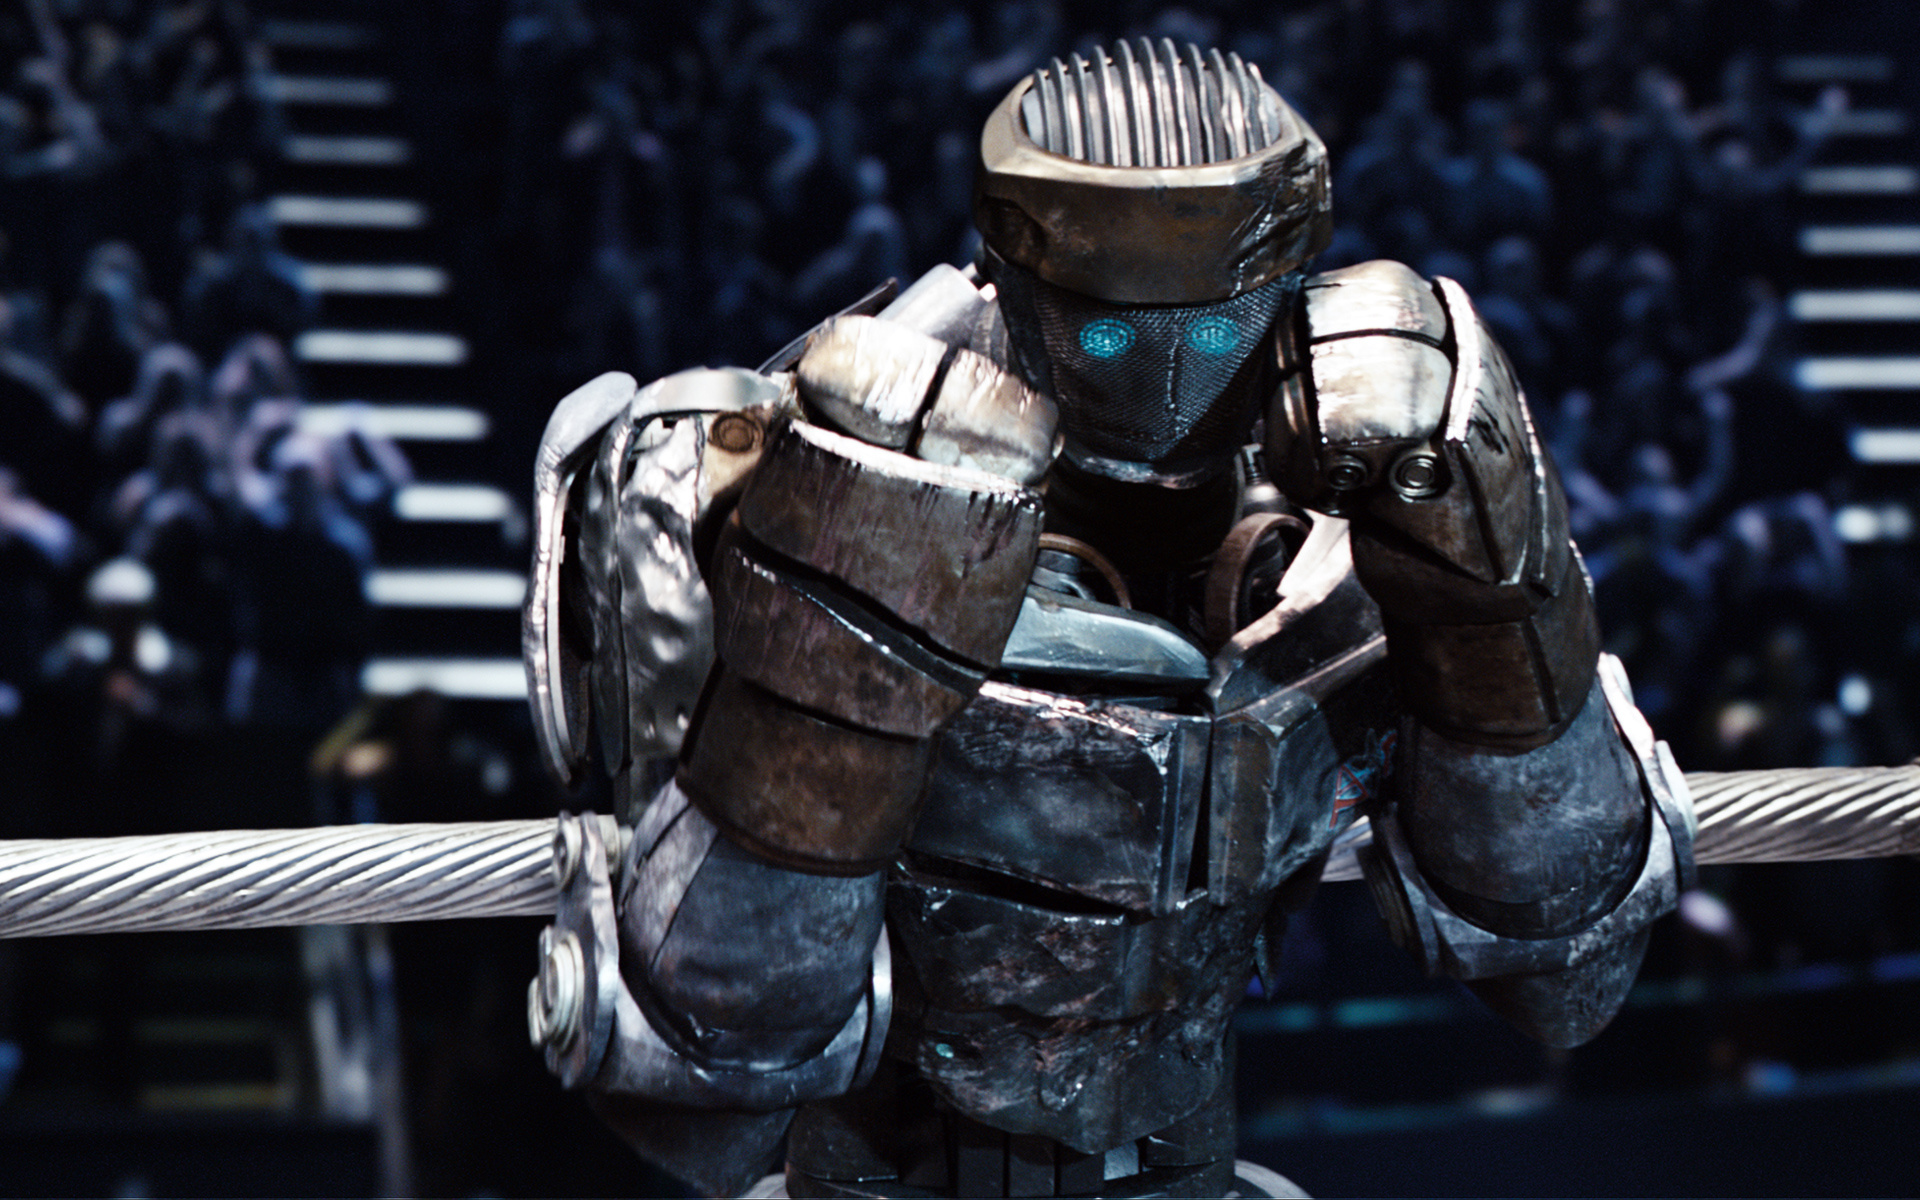 Real Steel: Atom, An Underworld 1 fighting bot. 1920x1200 HD Wallpaper.